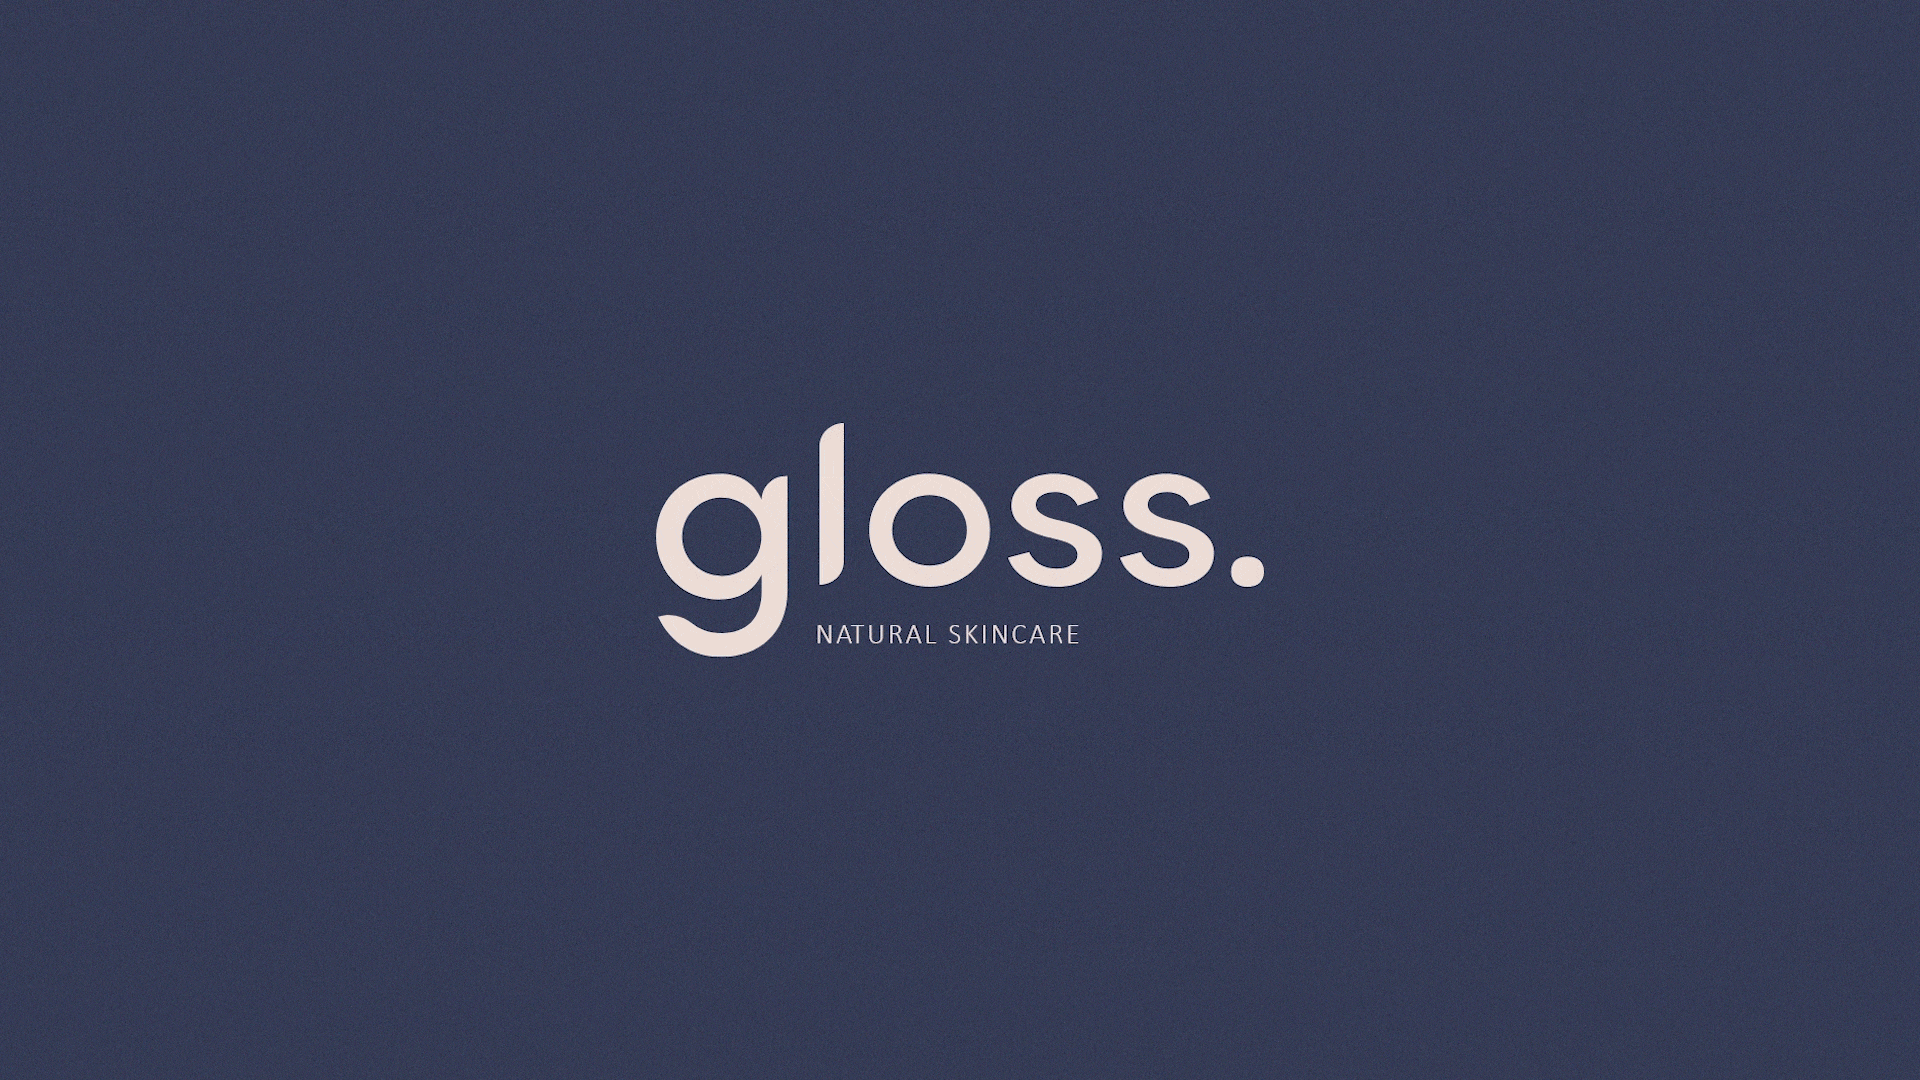 Gloss skincare brand